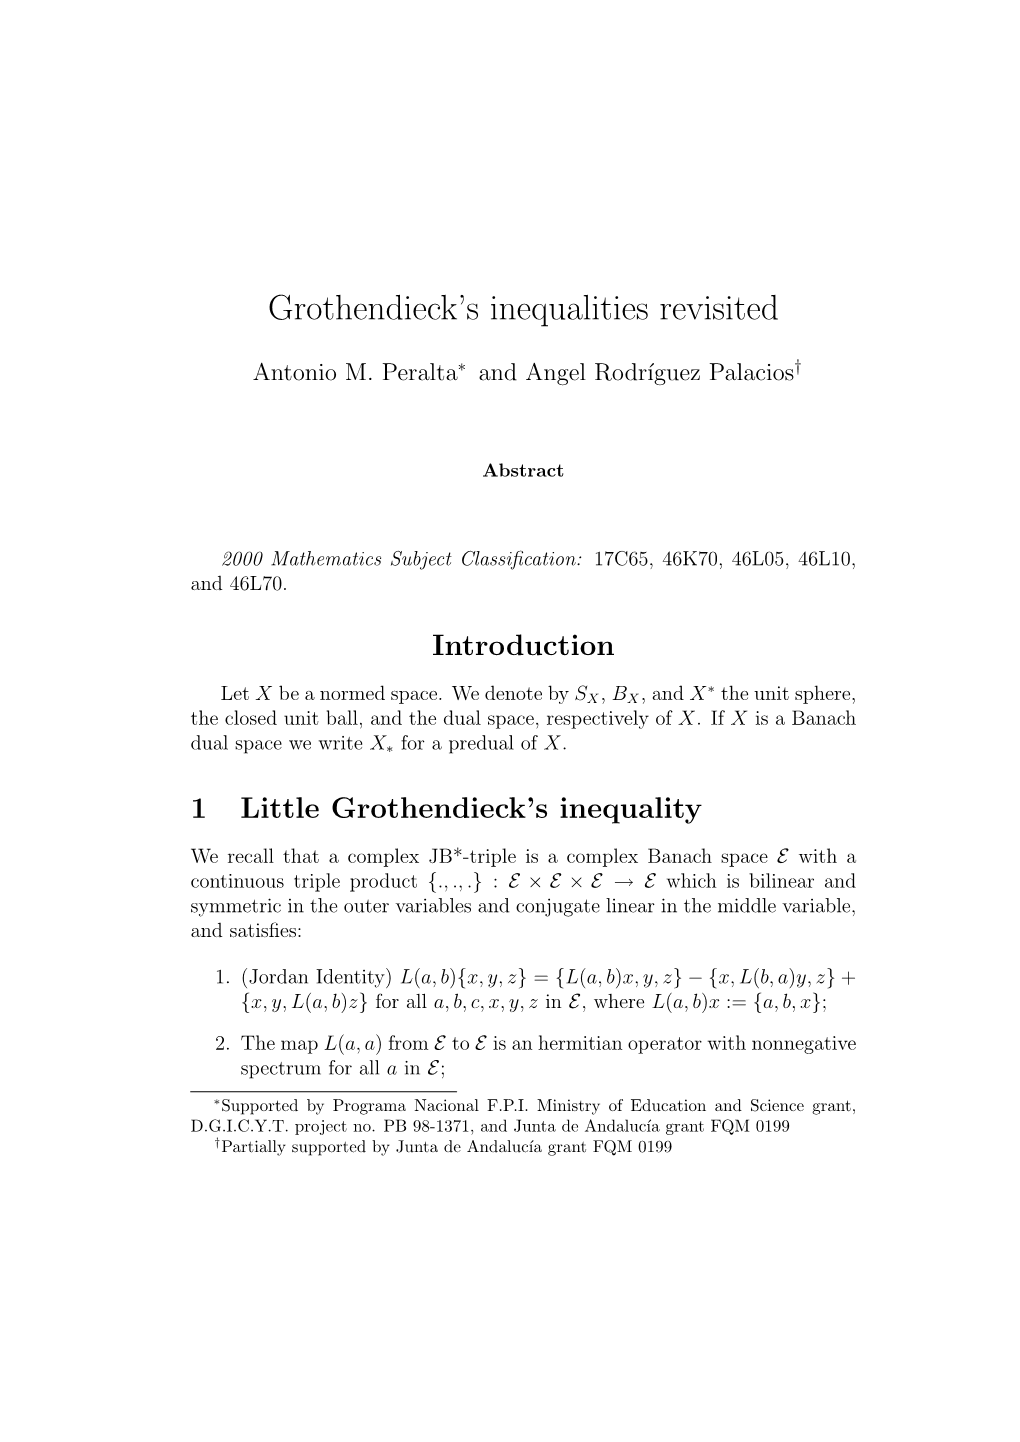 Grothendieck's Inequalities Revisited